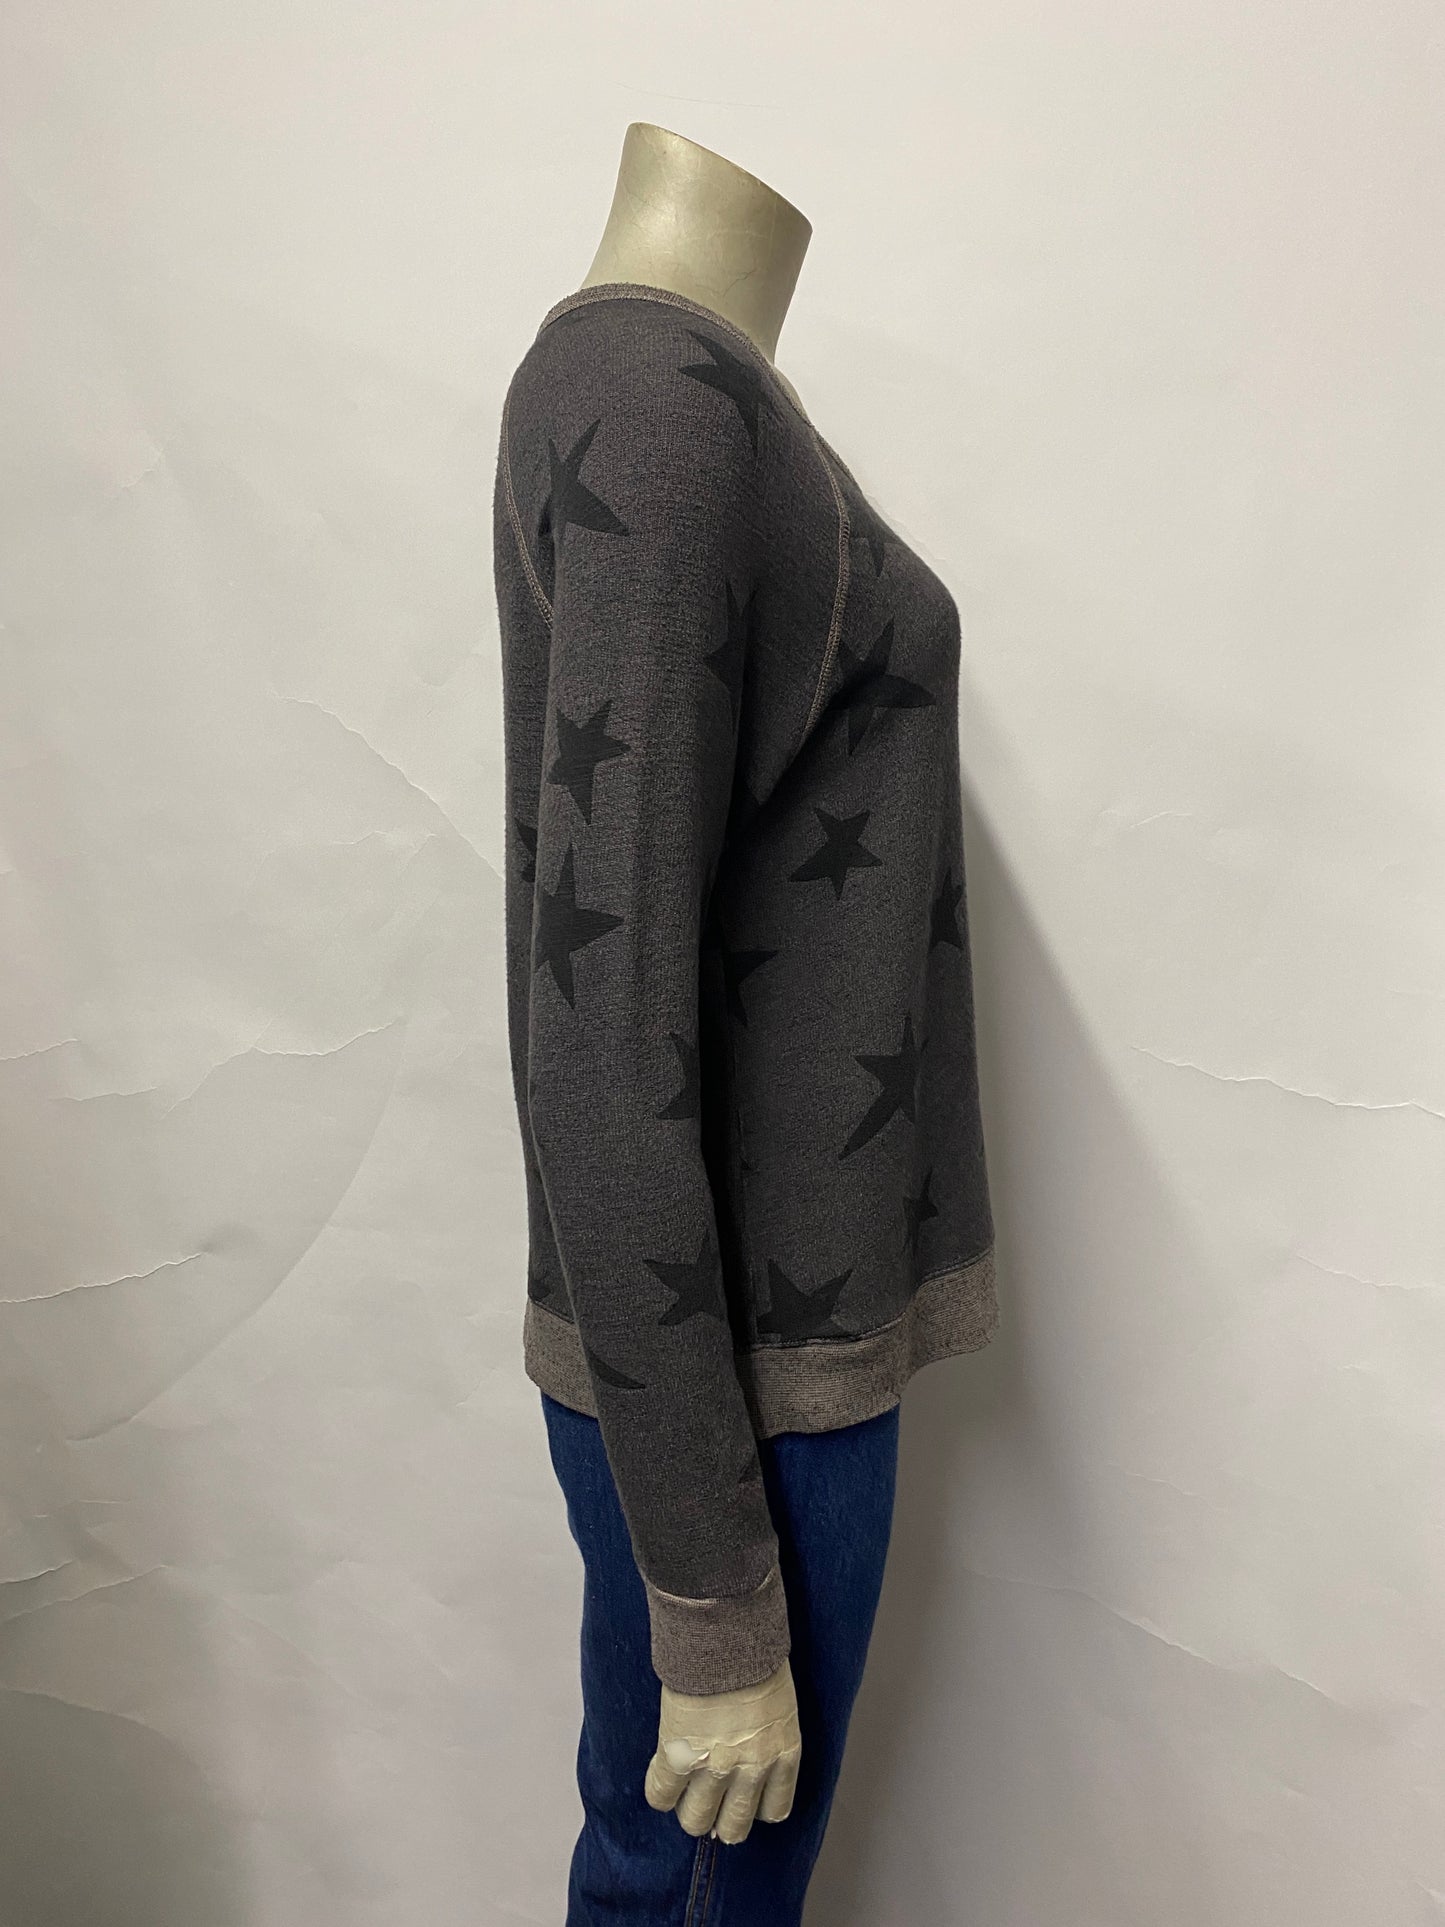 Sundry Grey Star Print Sweatshirt Medium